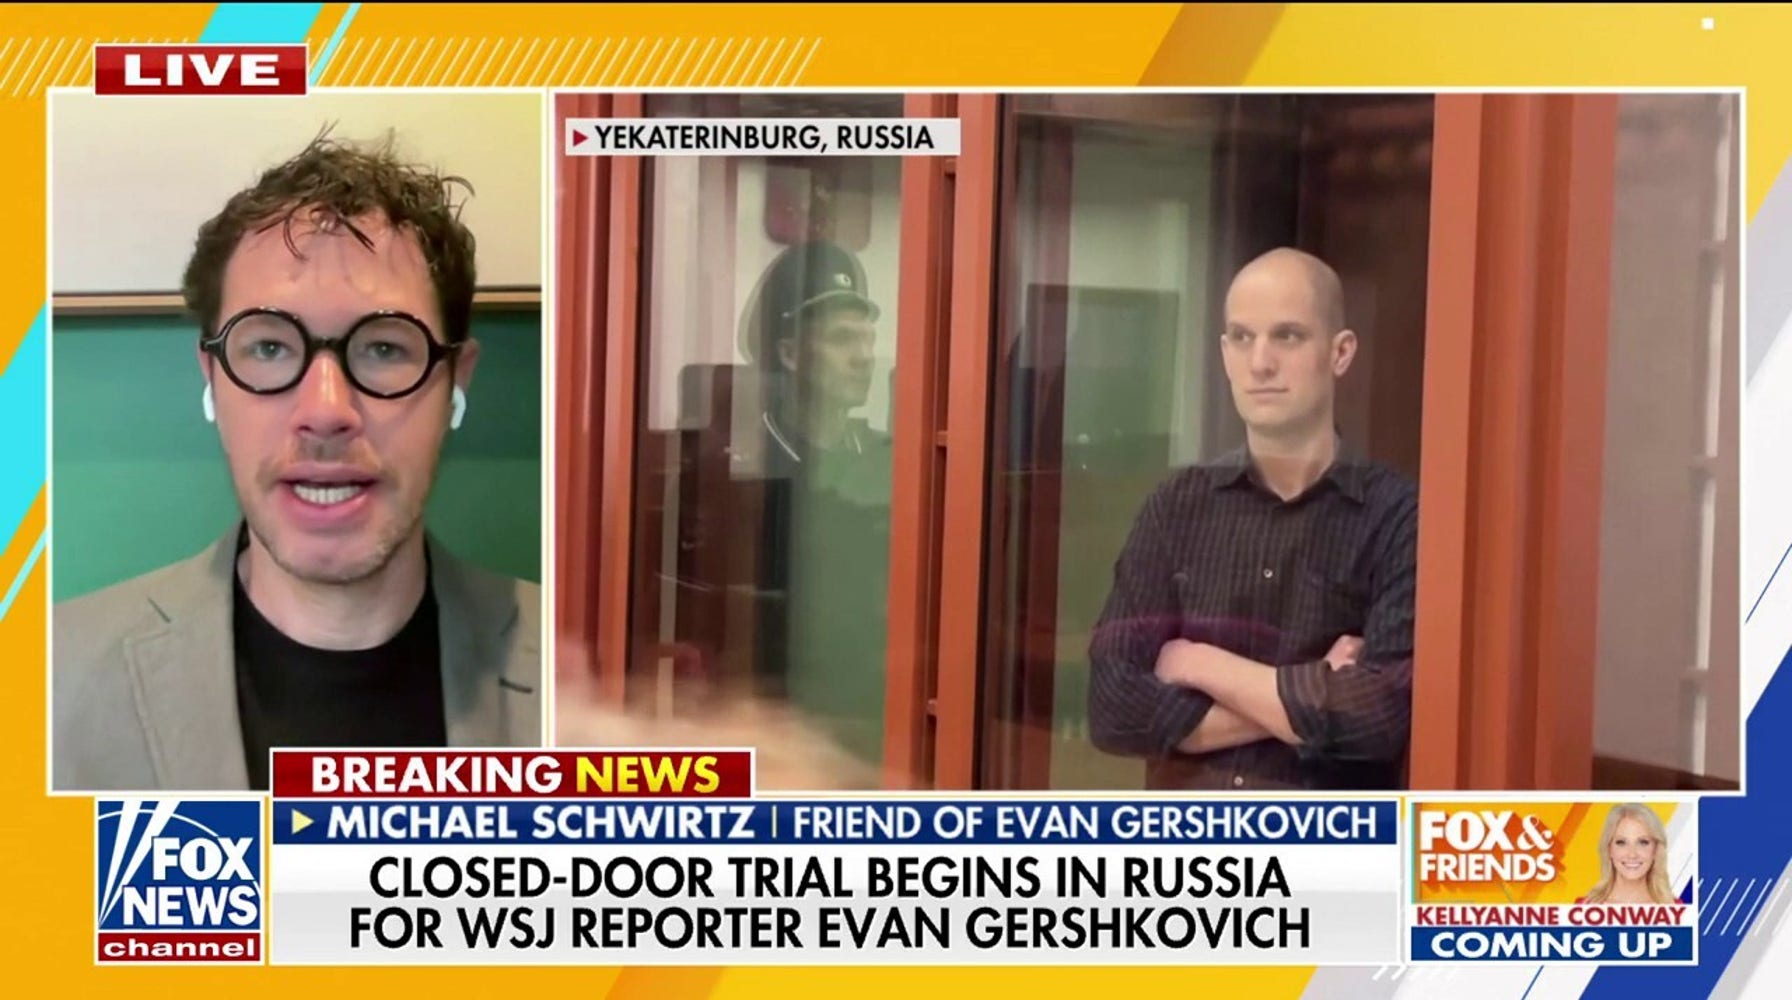 Evan Gershkovich's Closed-Door Trial in Russia Sparks Concerns of Unfair Treatment